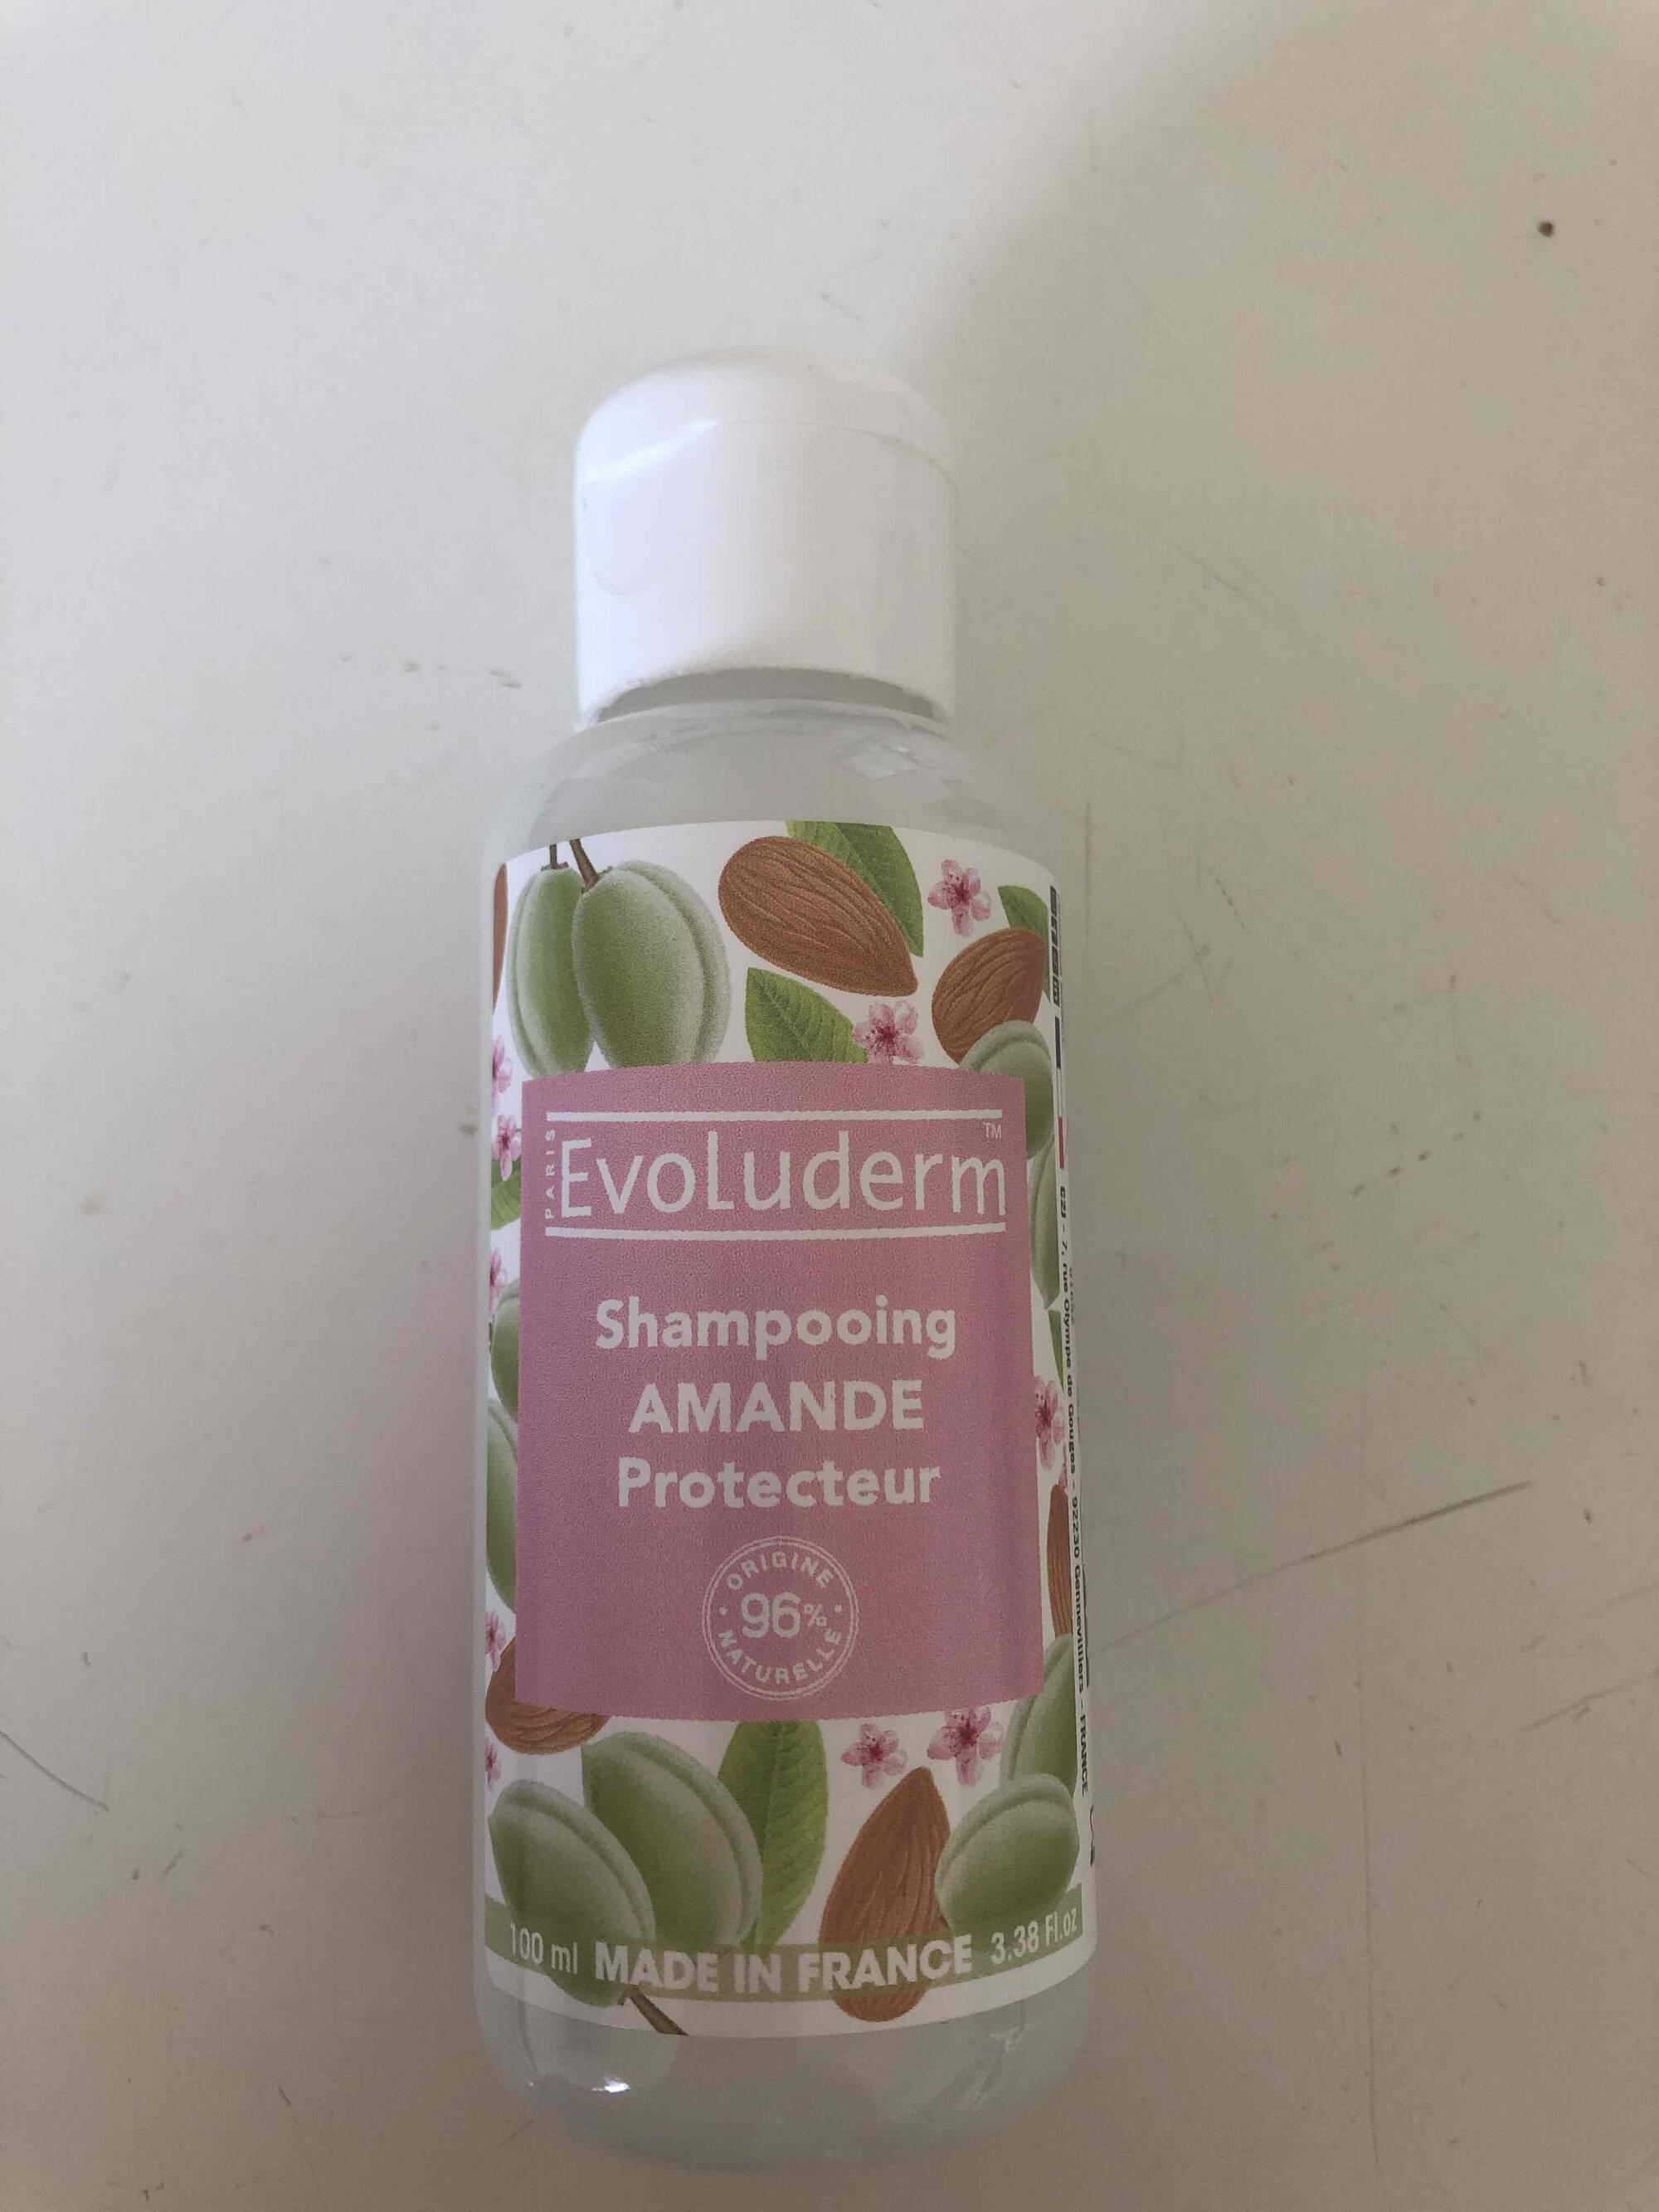 EVOLUDERM - Shampooing amande protecteur